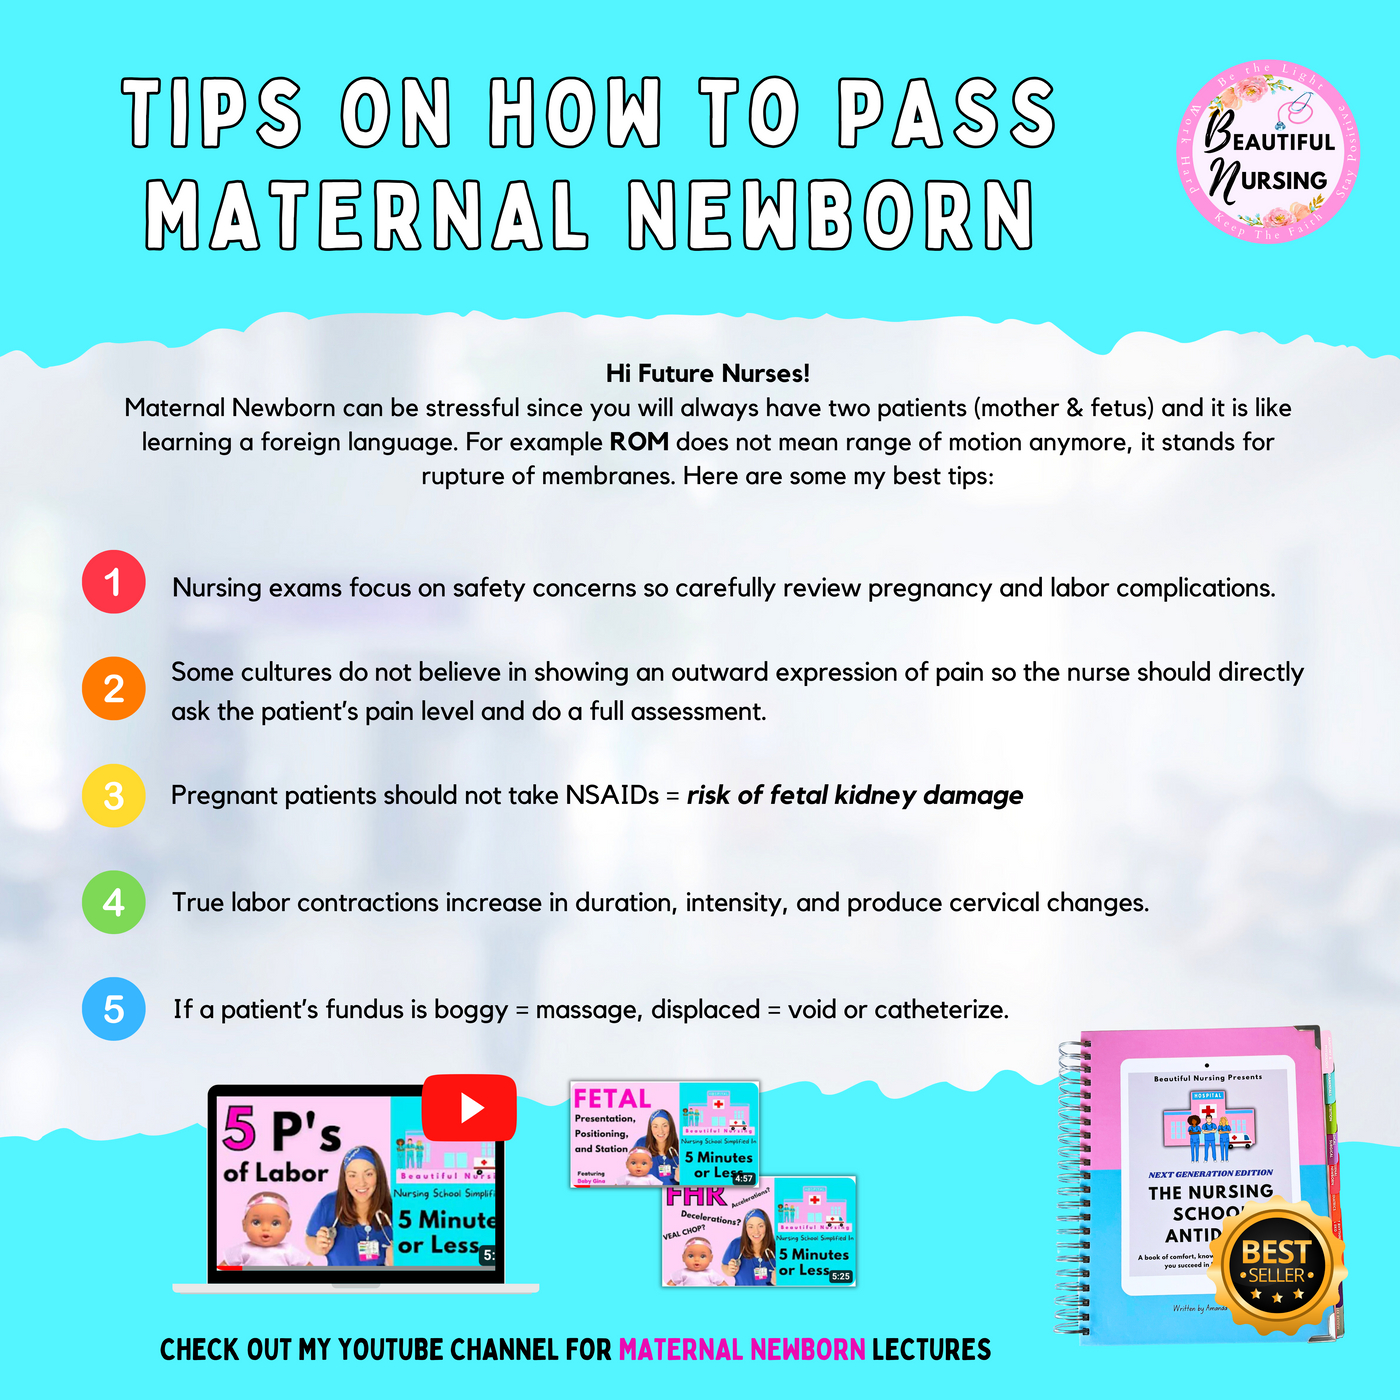 Maternal Newborn Bundle | Next Generation Edition